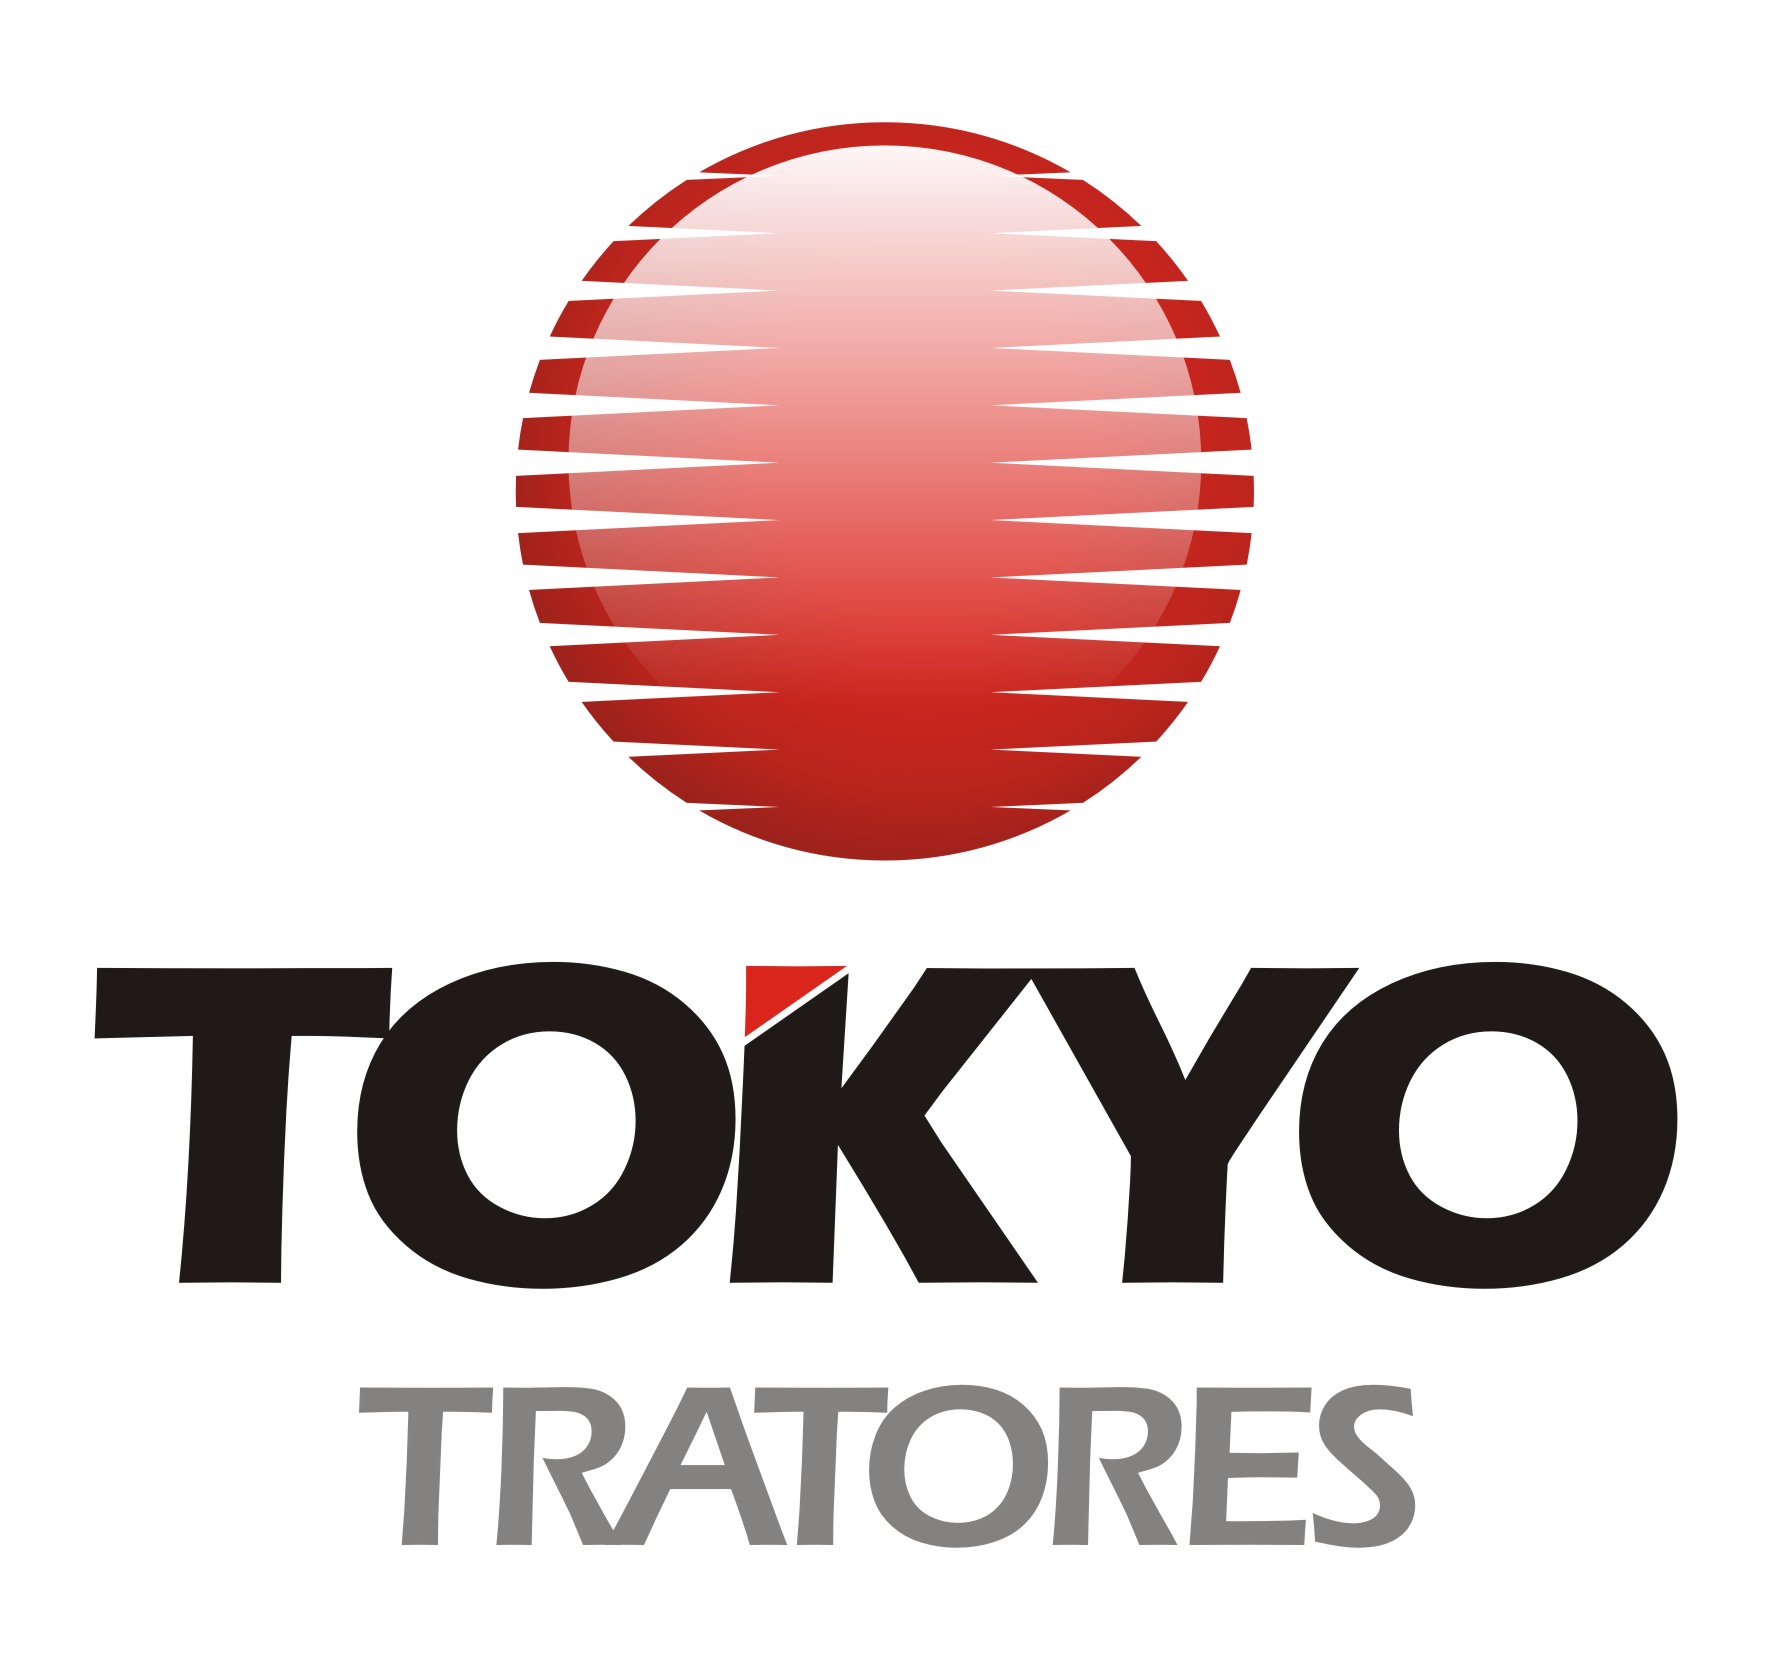 TOKYO TRATORES